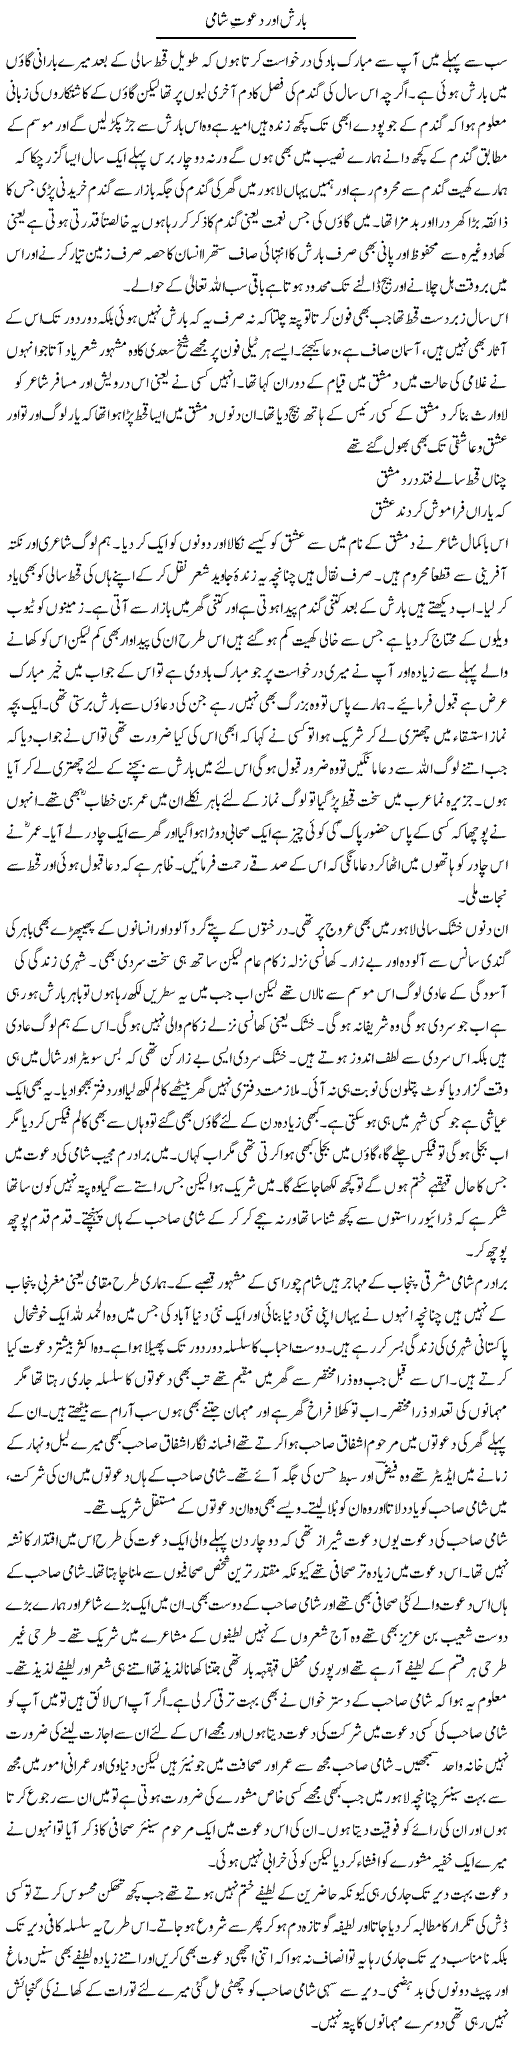 Barish Our Dawat e Shami | Abdul Qadir Hassan | Daily Urdu Columns